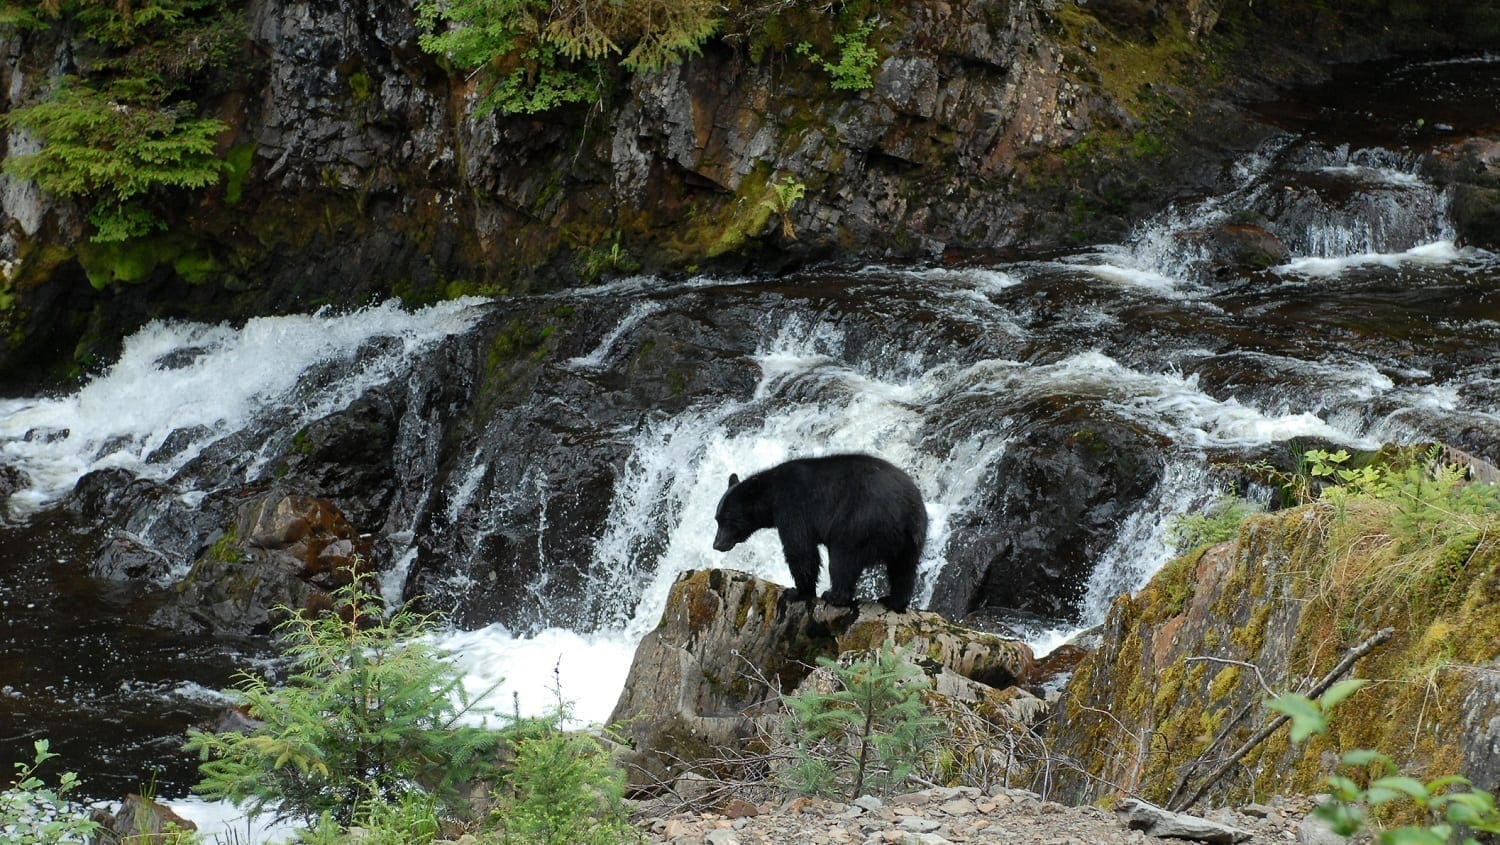 Black bear in an Alaskan stream: Photo 79886466 © Sports Images | Dreamstime.com